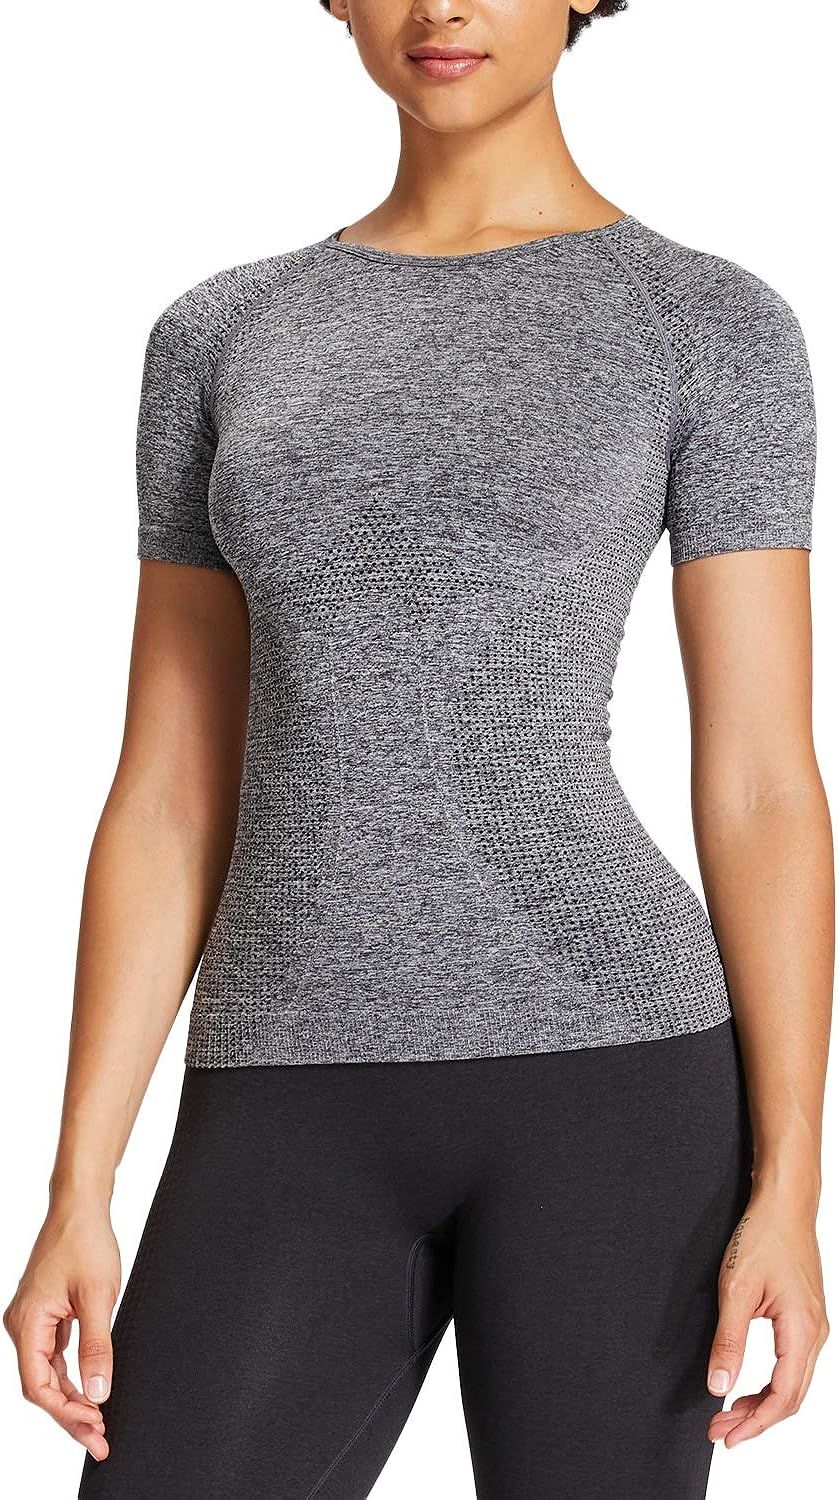 Women's Workout Vital Short Sleeve Seamless Crop Top Gym Sport Shirts | Amazon (US)